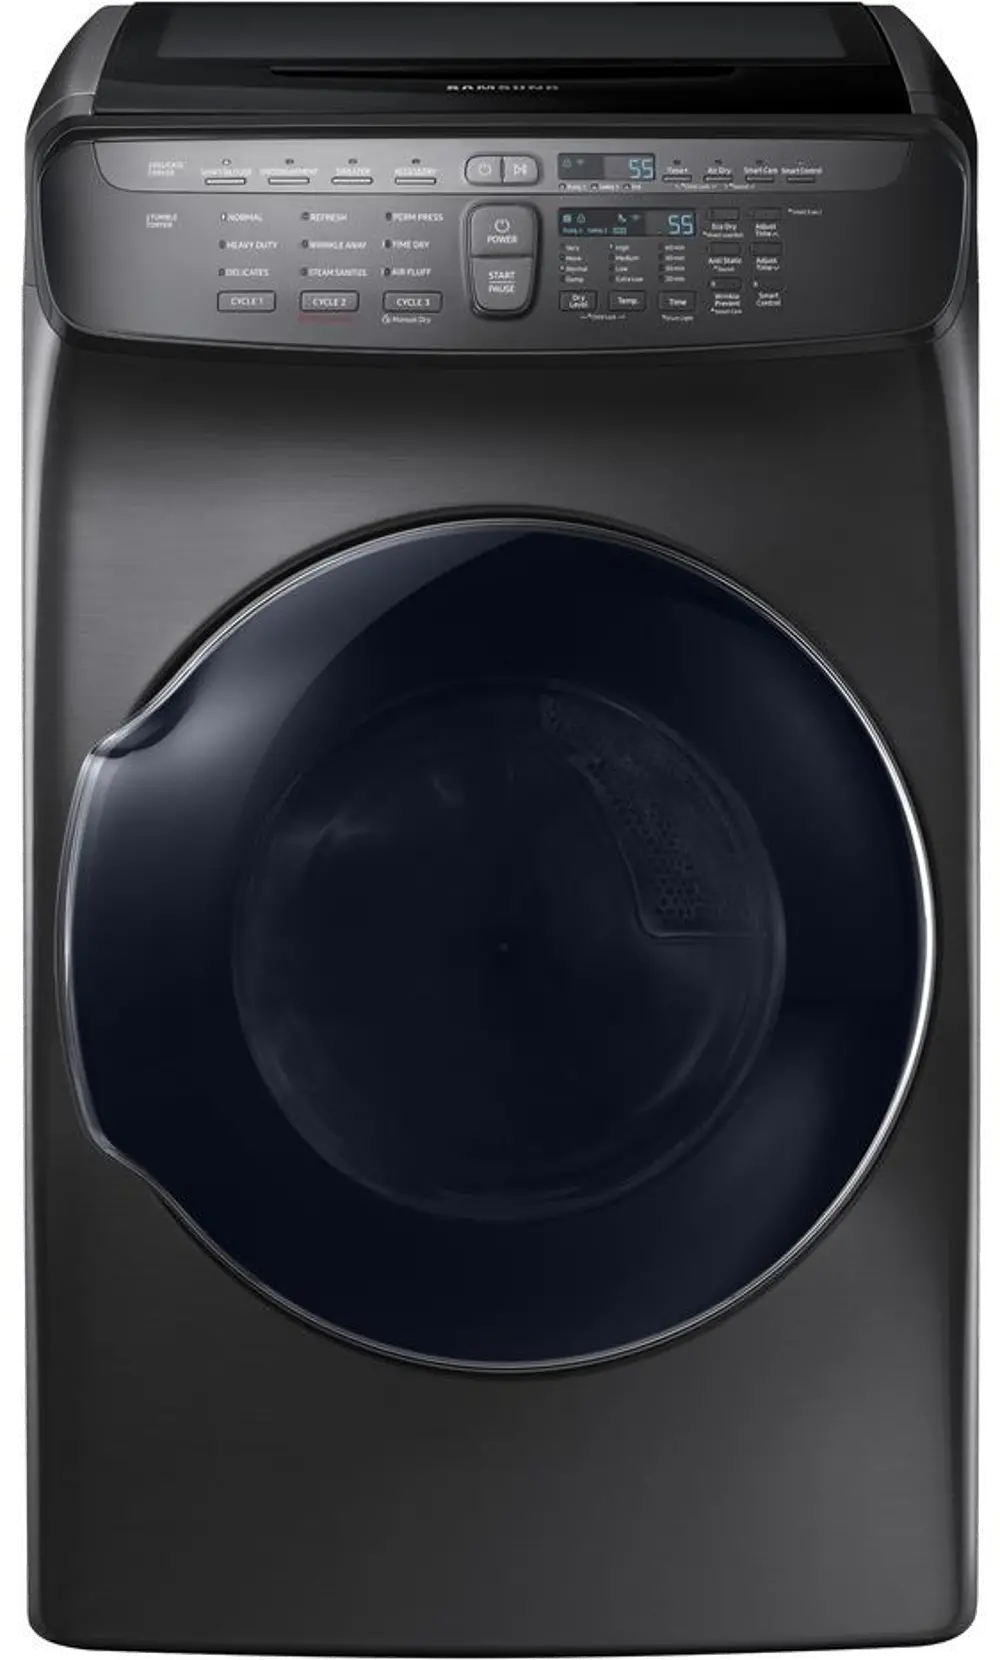 DVE55M9600V Samsung FlexDry Electric Dryer - 7.5 cu. ft. Black Stainless Steel-1